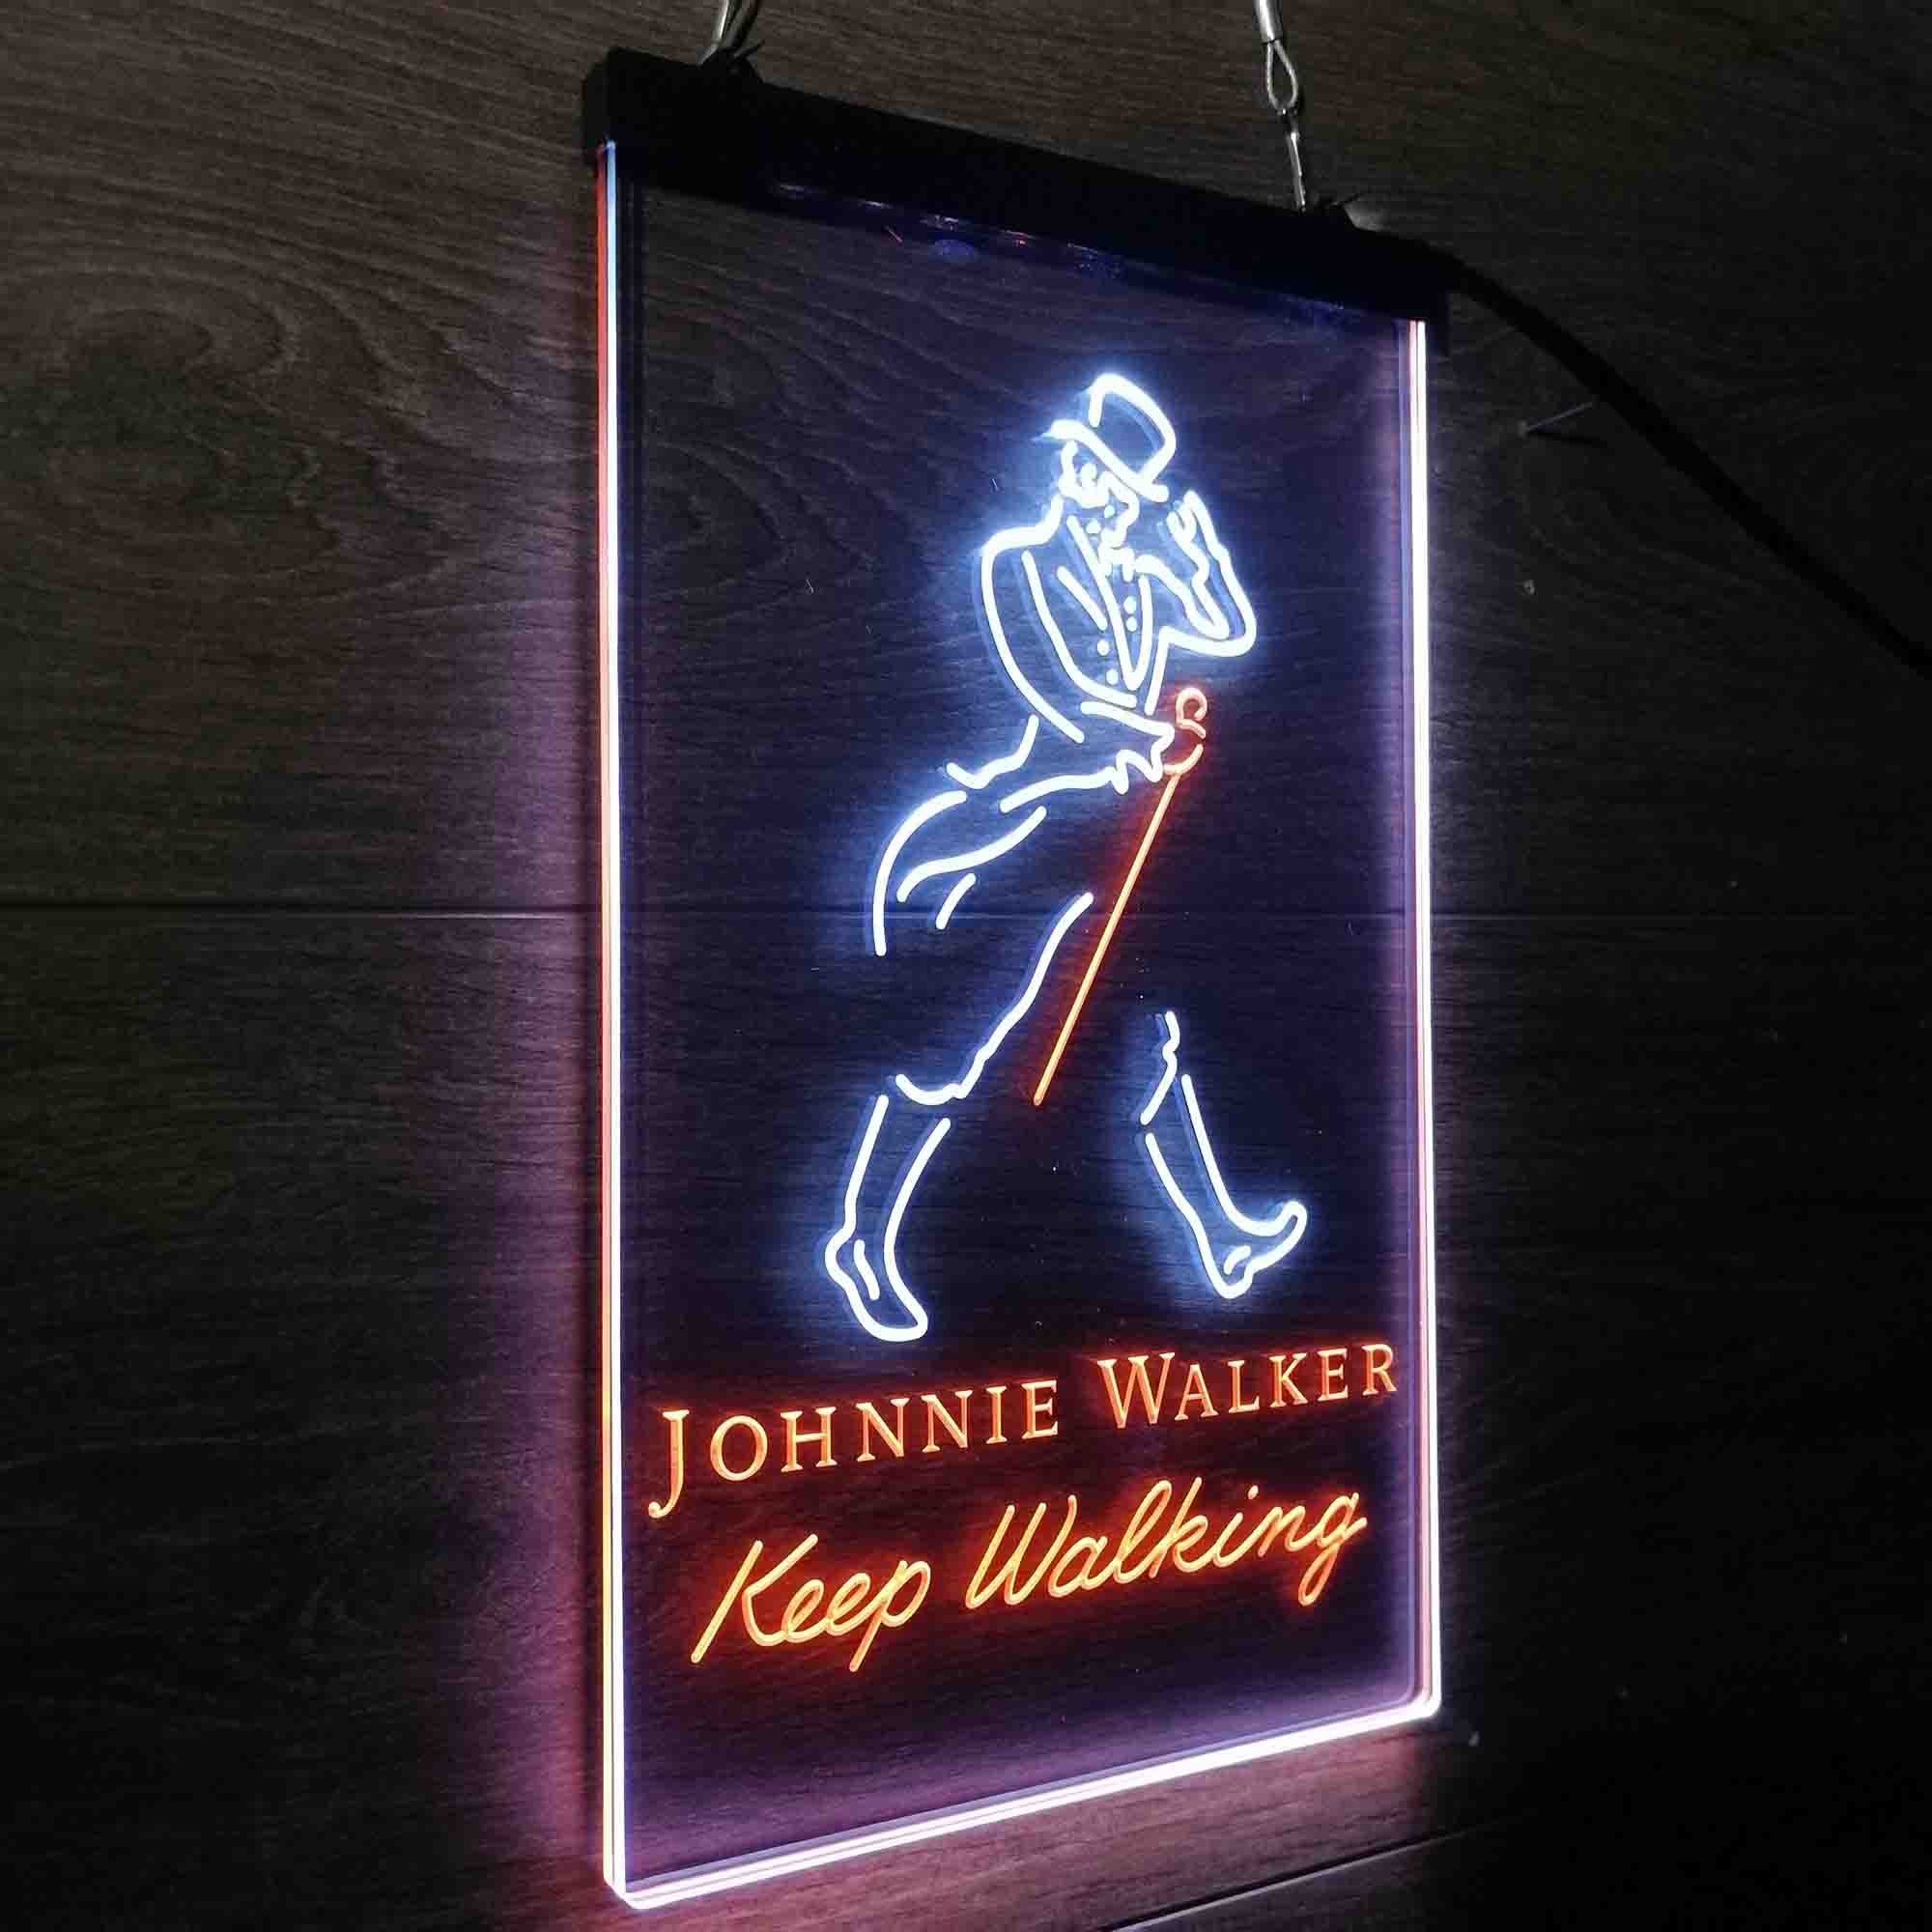 Jonnie Walker Man Cave Keep Walking LED Neon Sign